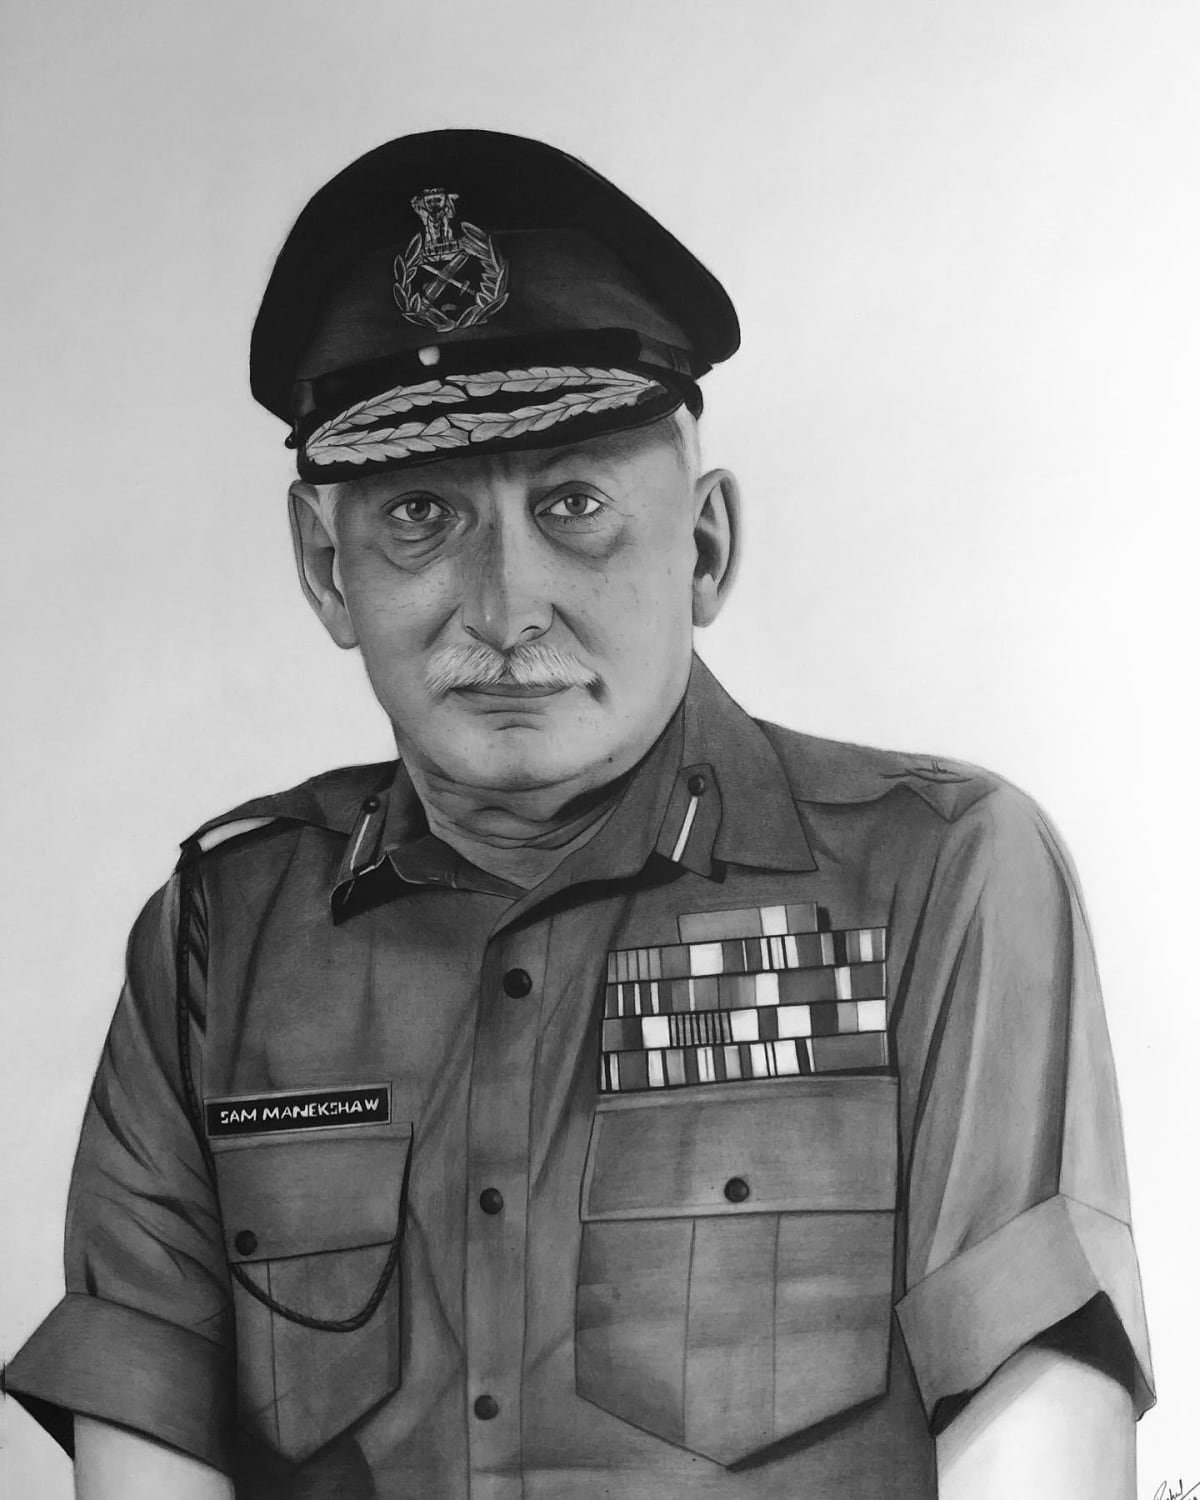 Drawing of India's First Field Marshal- Sam Manekshaw.